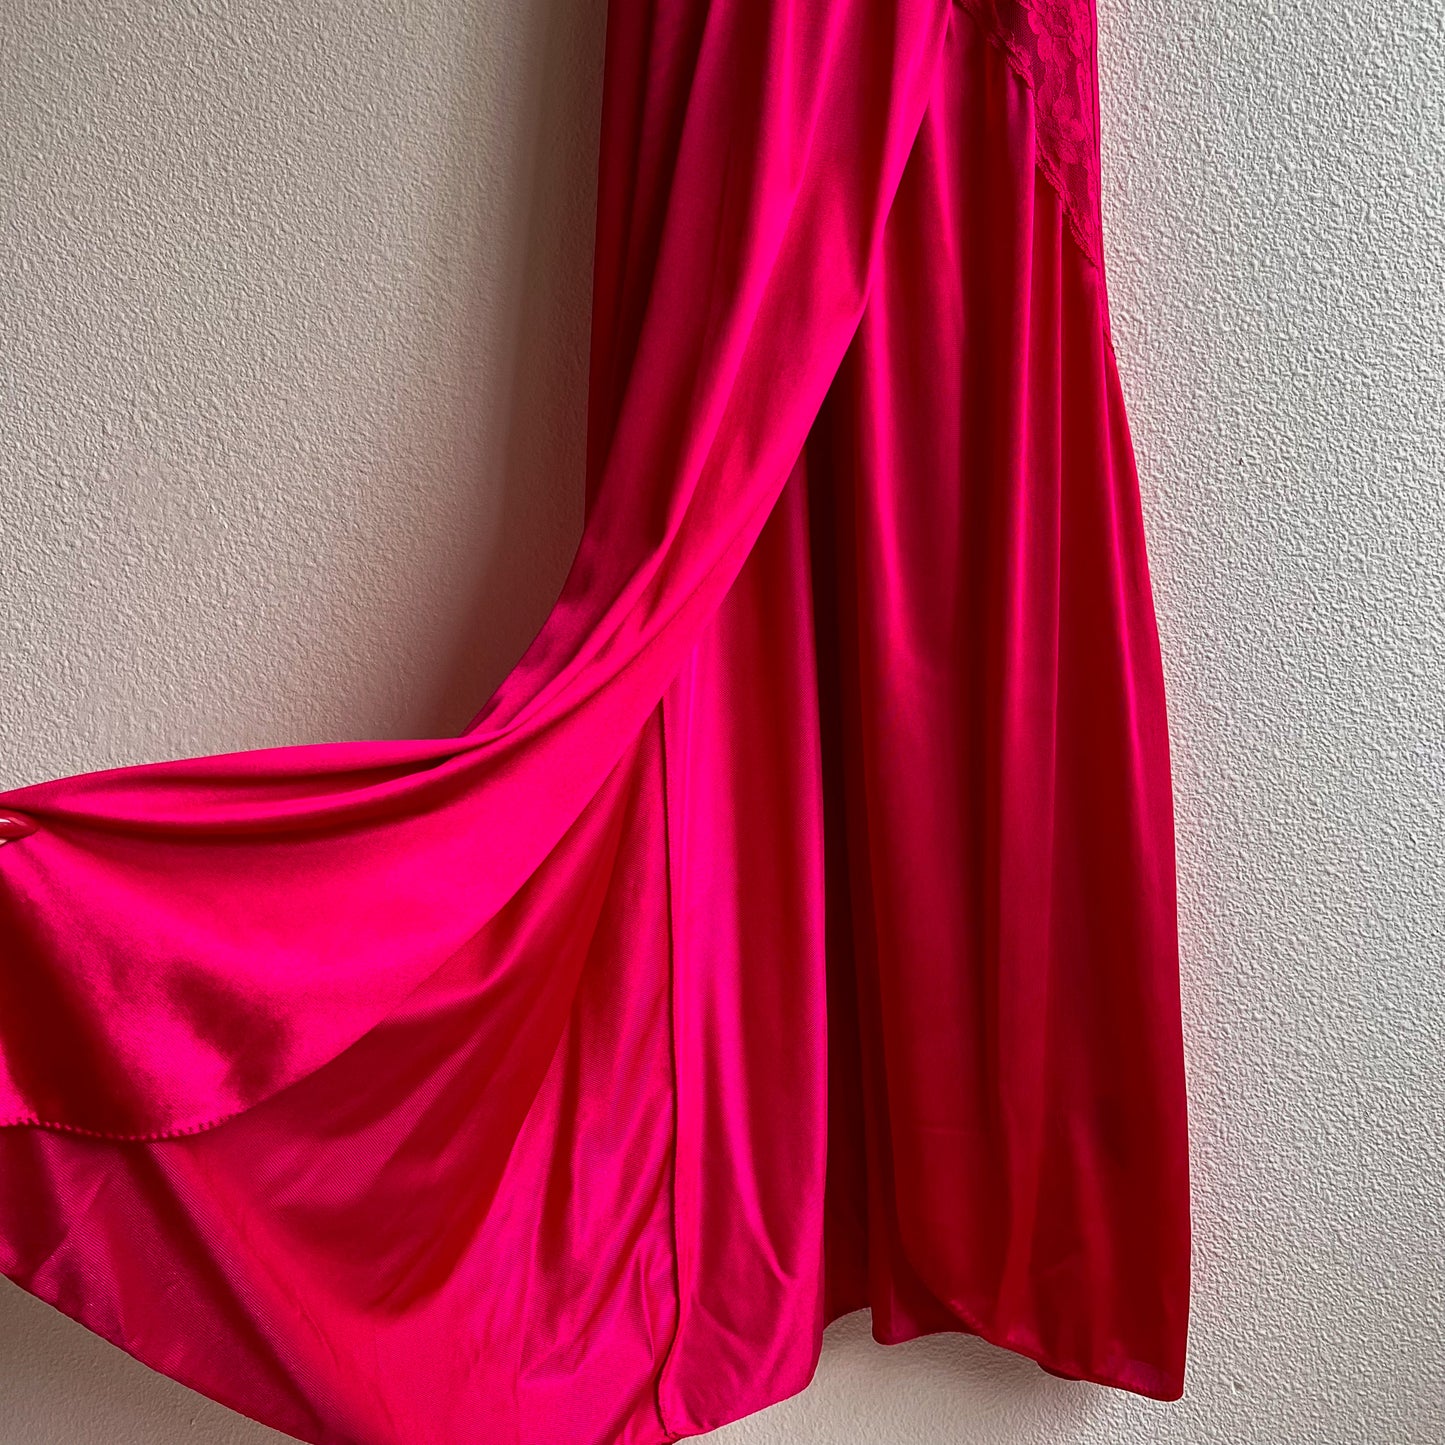 1980s Magenta Slip Dress With Lace Trim (S/M)